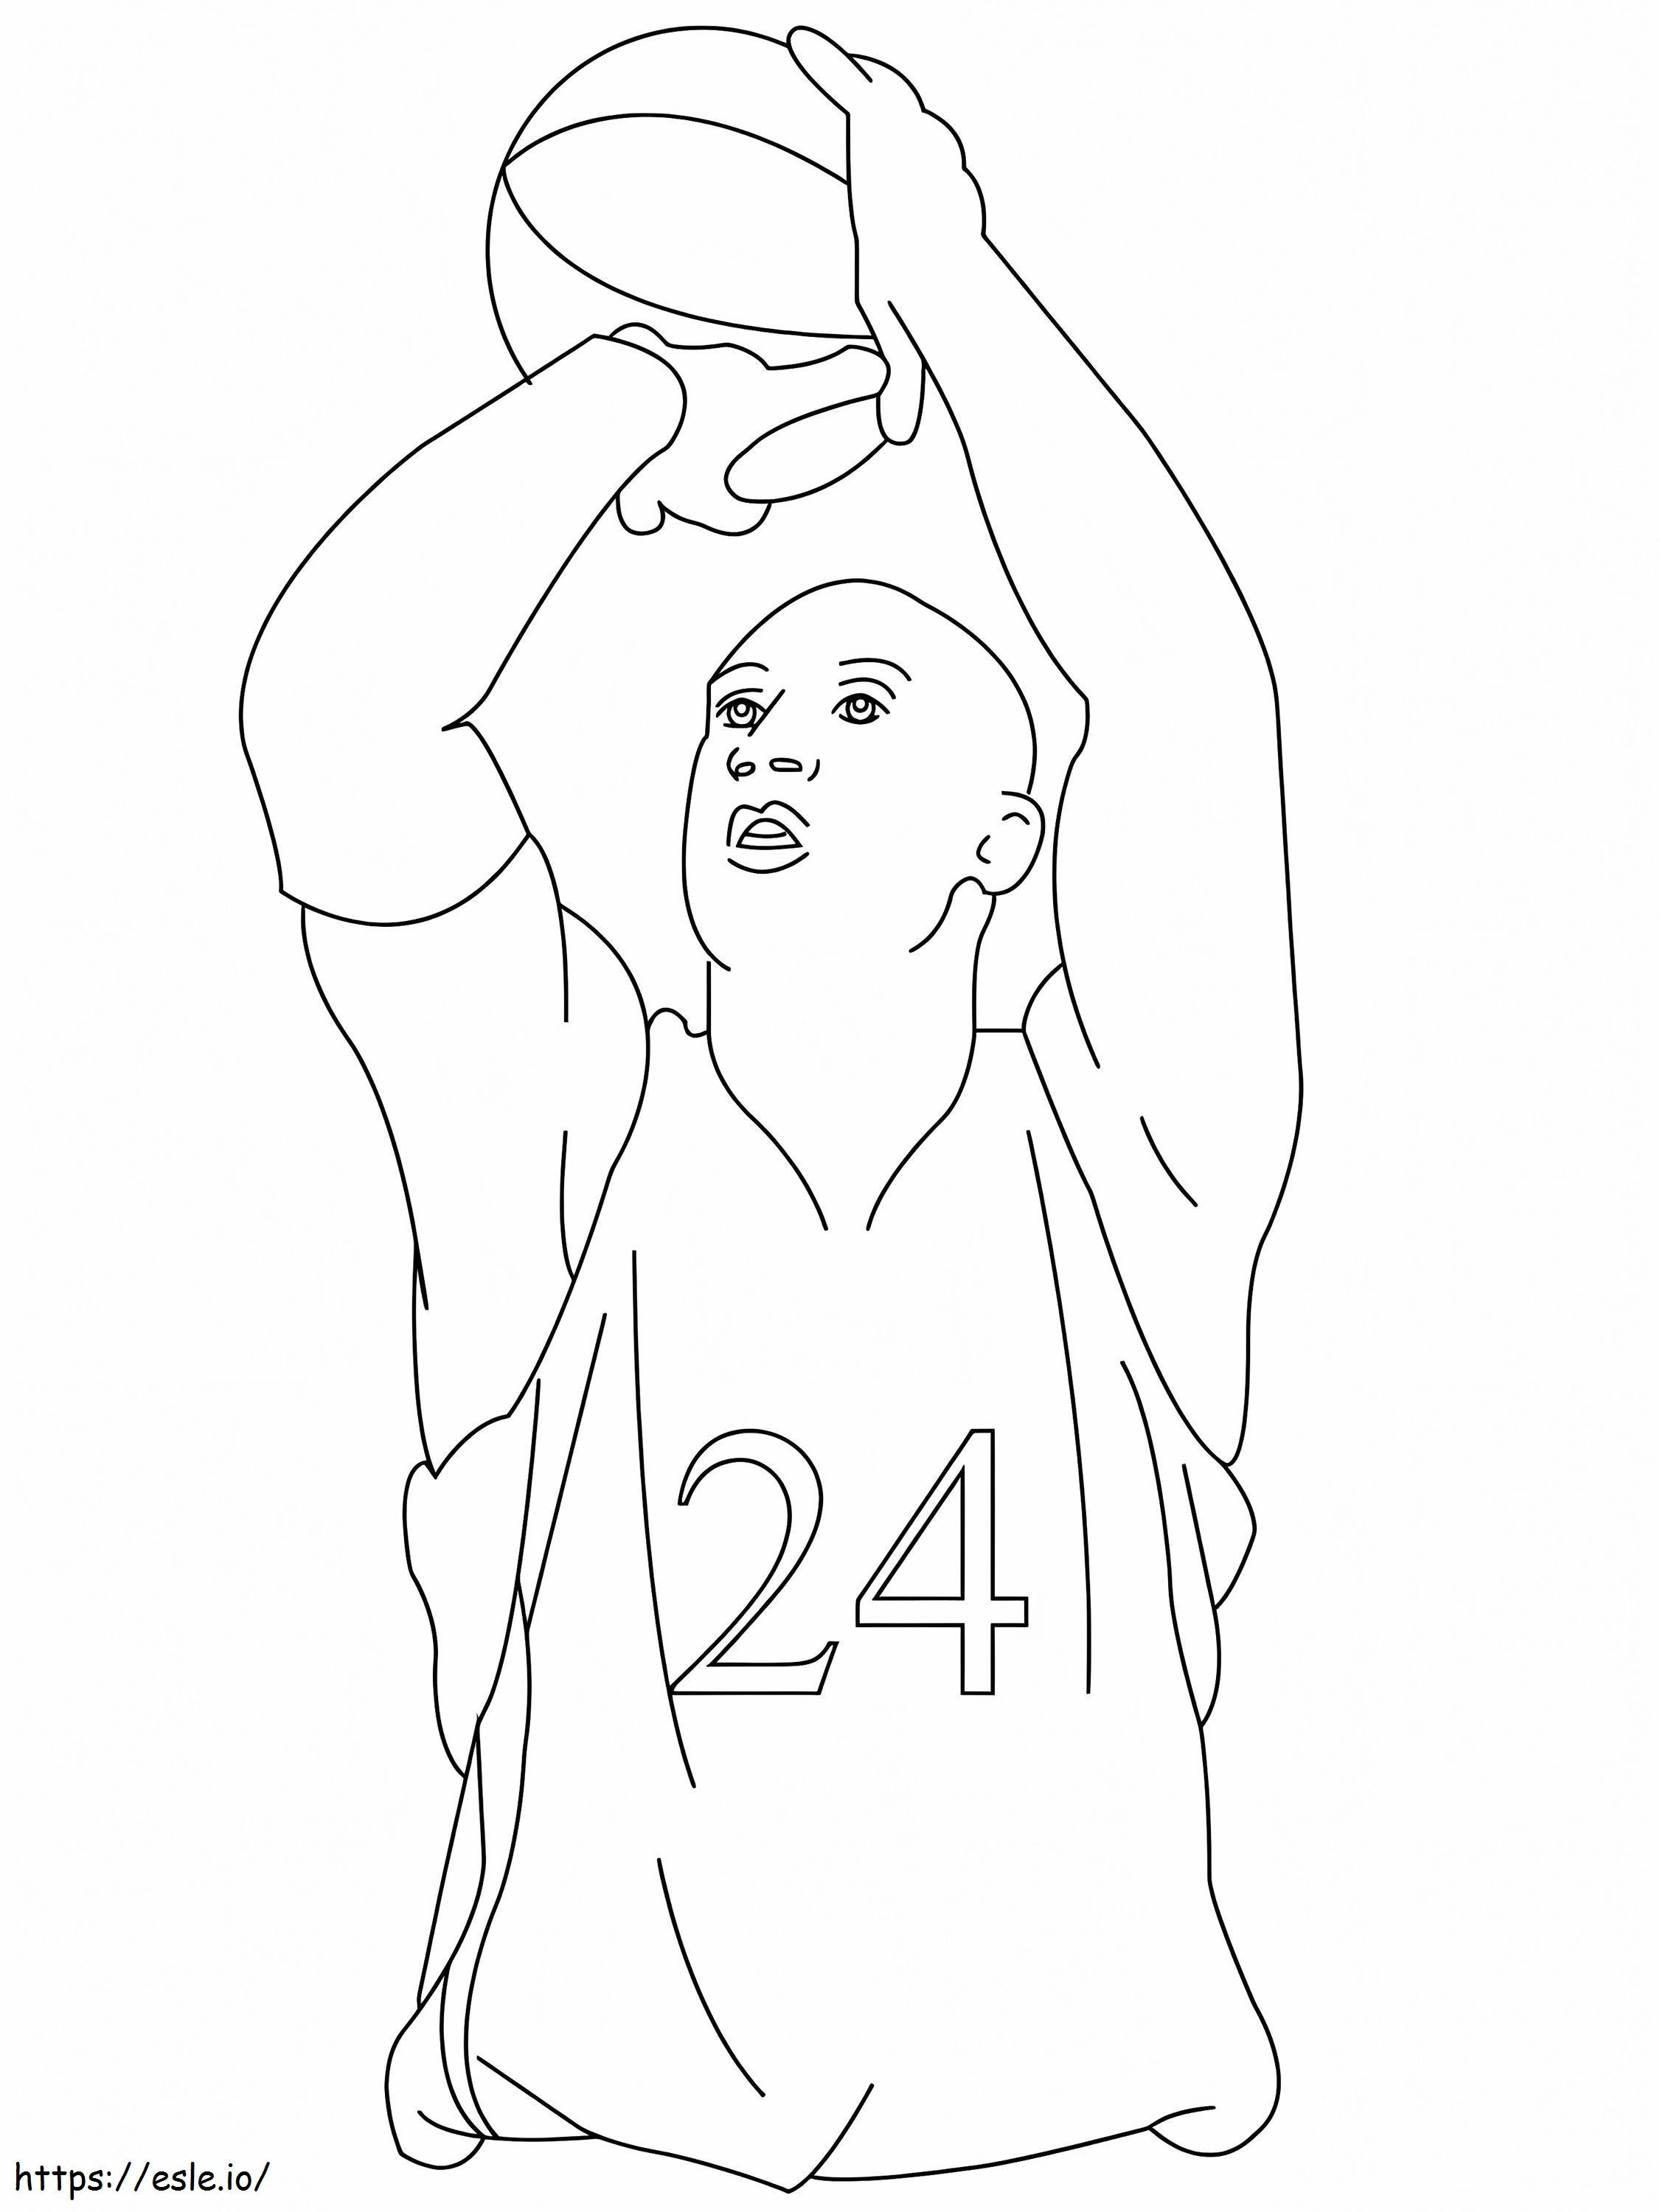 Kobe Bryant do koloru kolorowanka